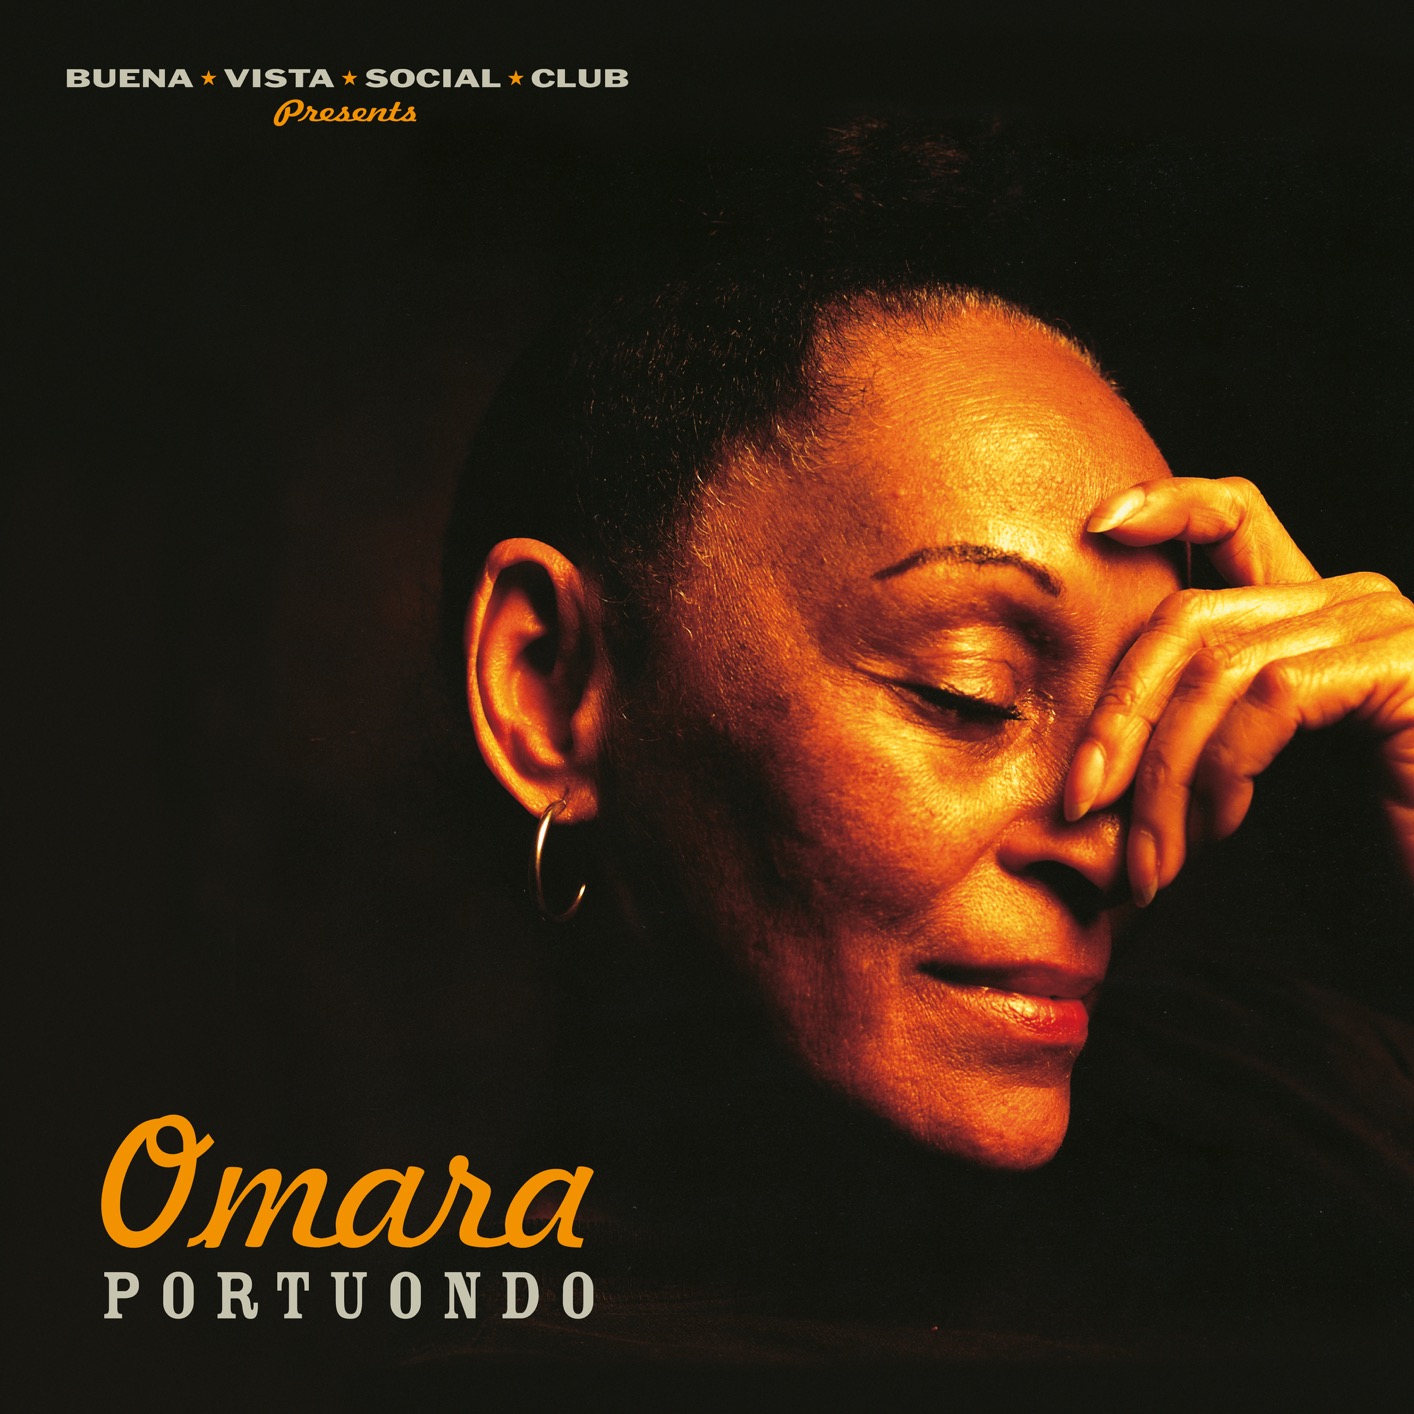 Omara Portuondo - Omara Portuondo (Buena Vista Social Club Presents) (2000/2019) [FLAC 24bit/96kHz]